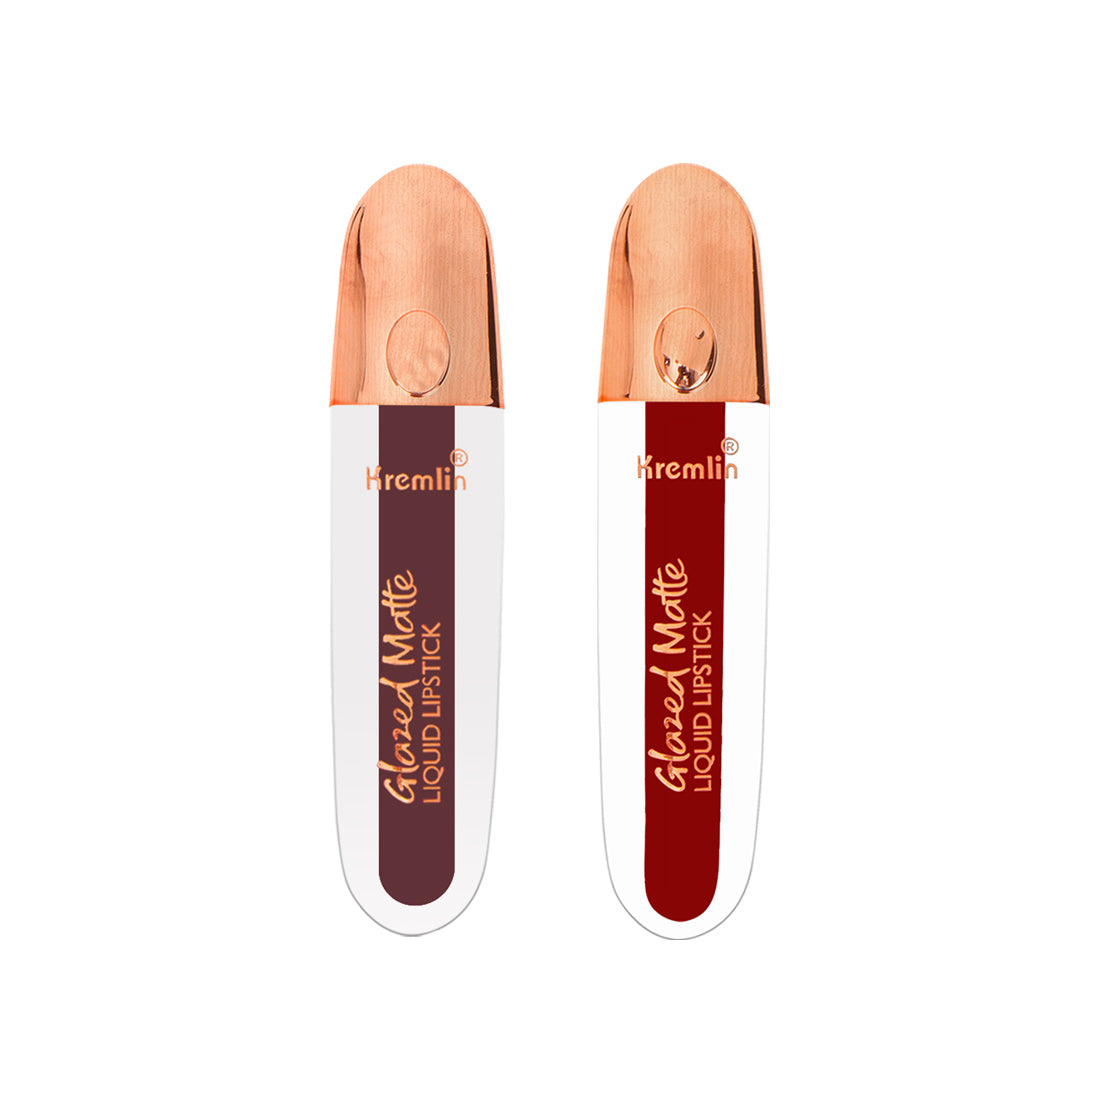 Kremlin Glazed Matte Liquid Lipstick Lips Pack of 2 (Sizzling Slayer,Fiery Queen)